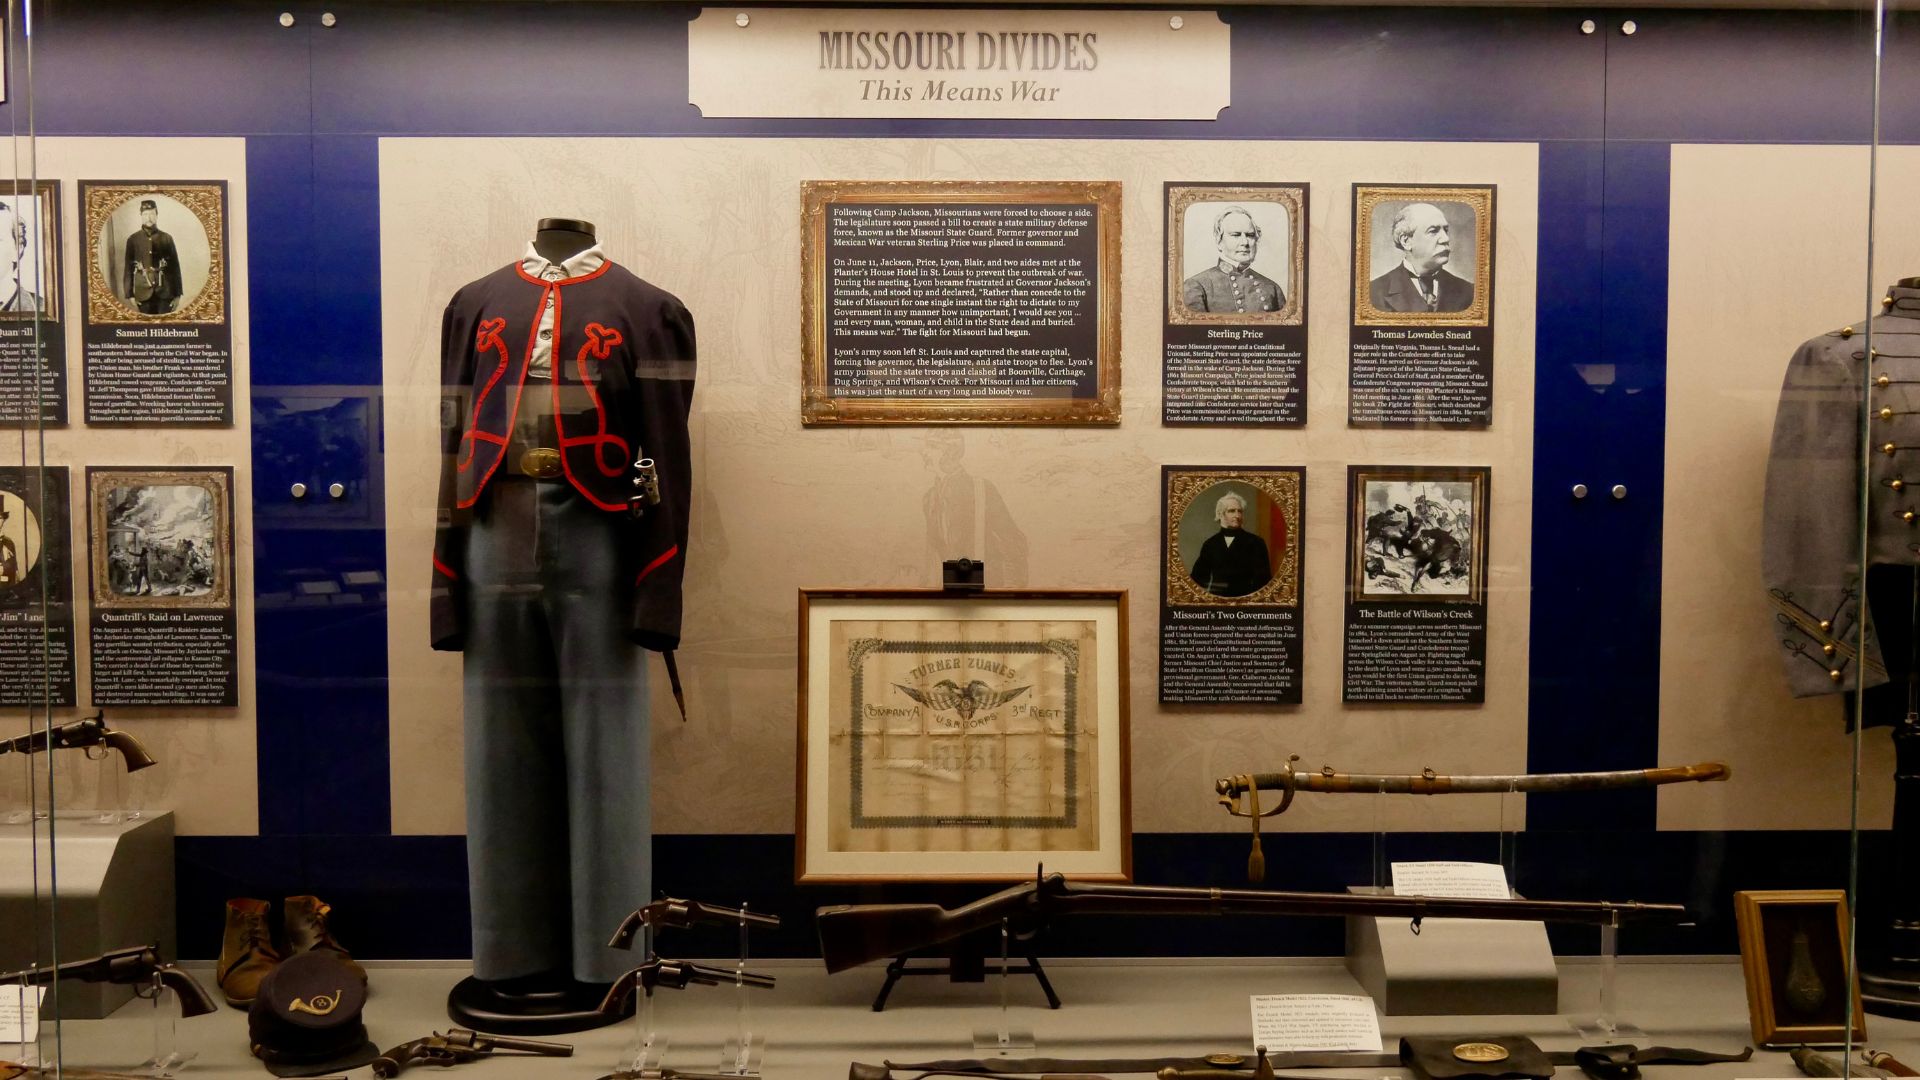 An exhibit illustrates Missouri's role in the American Civil War.